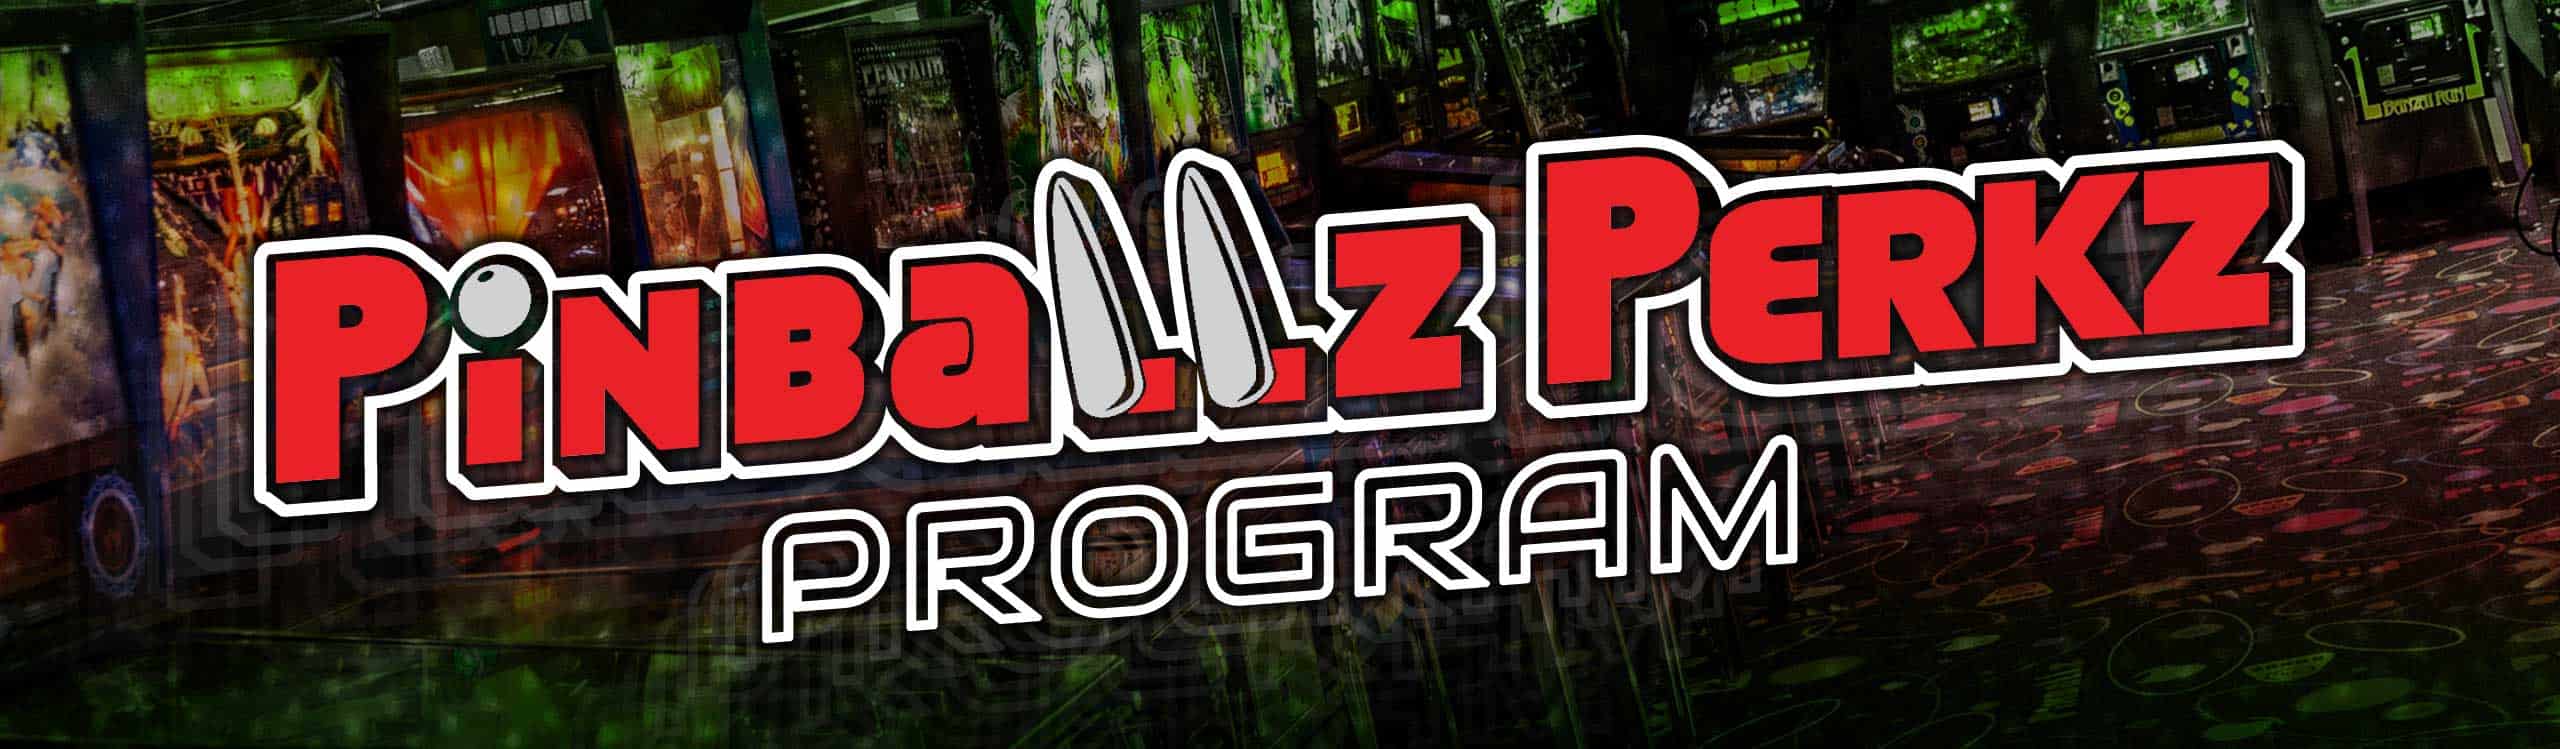 Pinballz Perkz Program